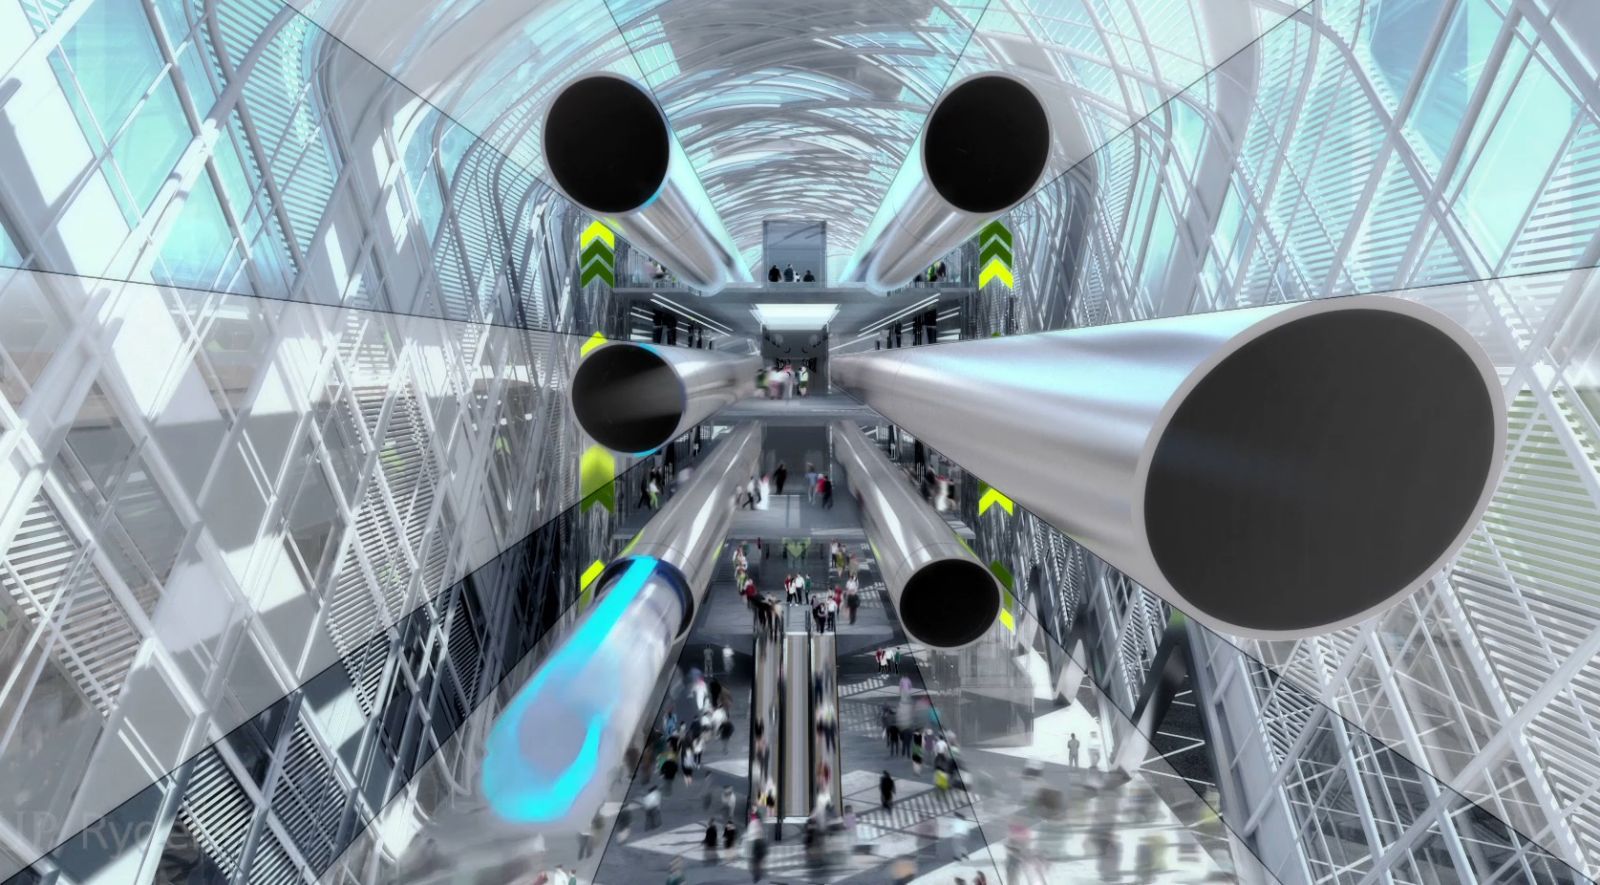 Hyperloop One Global Challenge